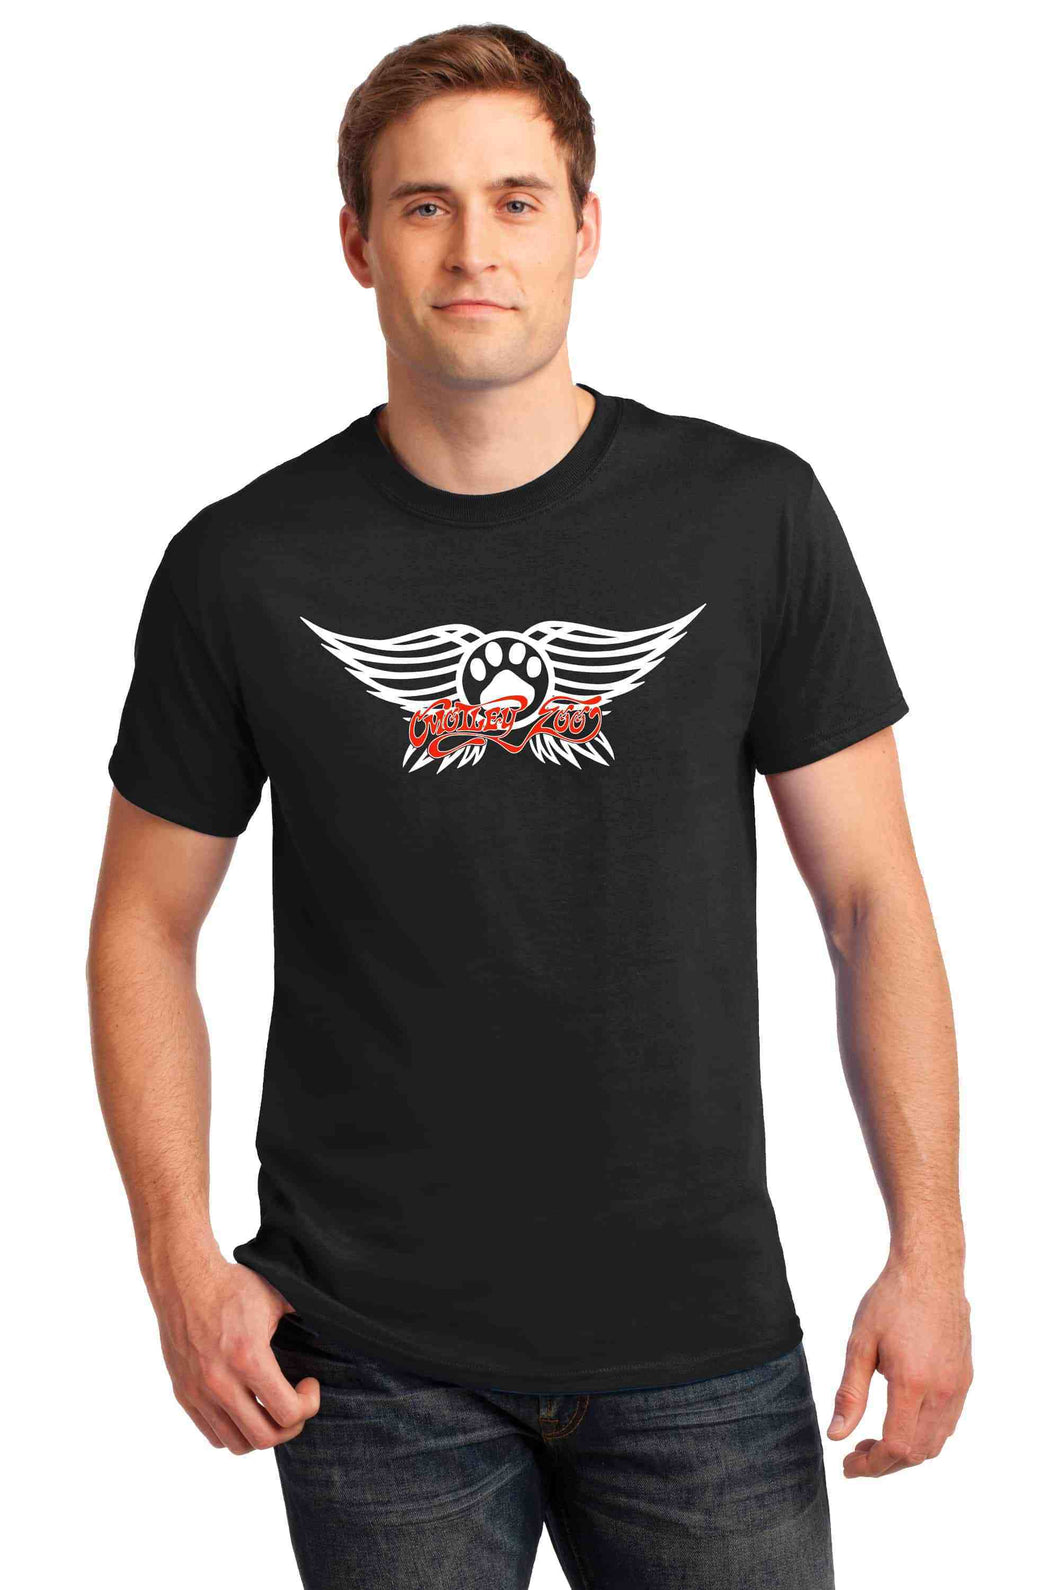 Aero Wings Motley Zoo Logo- Men's/Unisex or Women's T-shirt